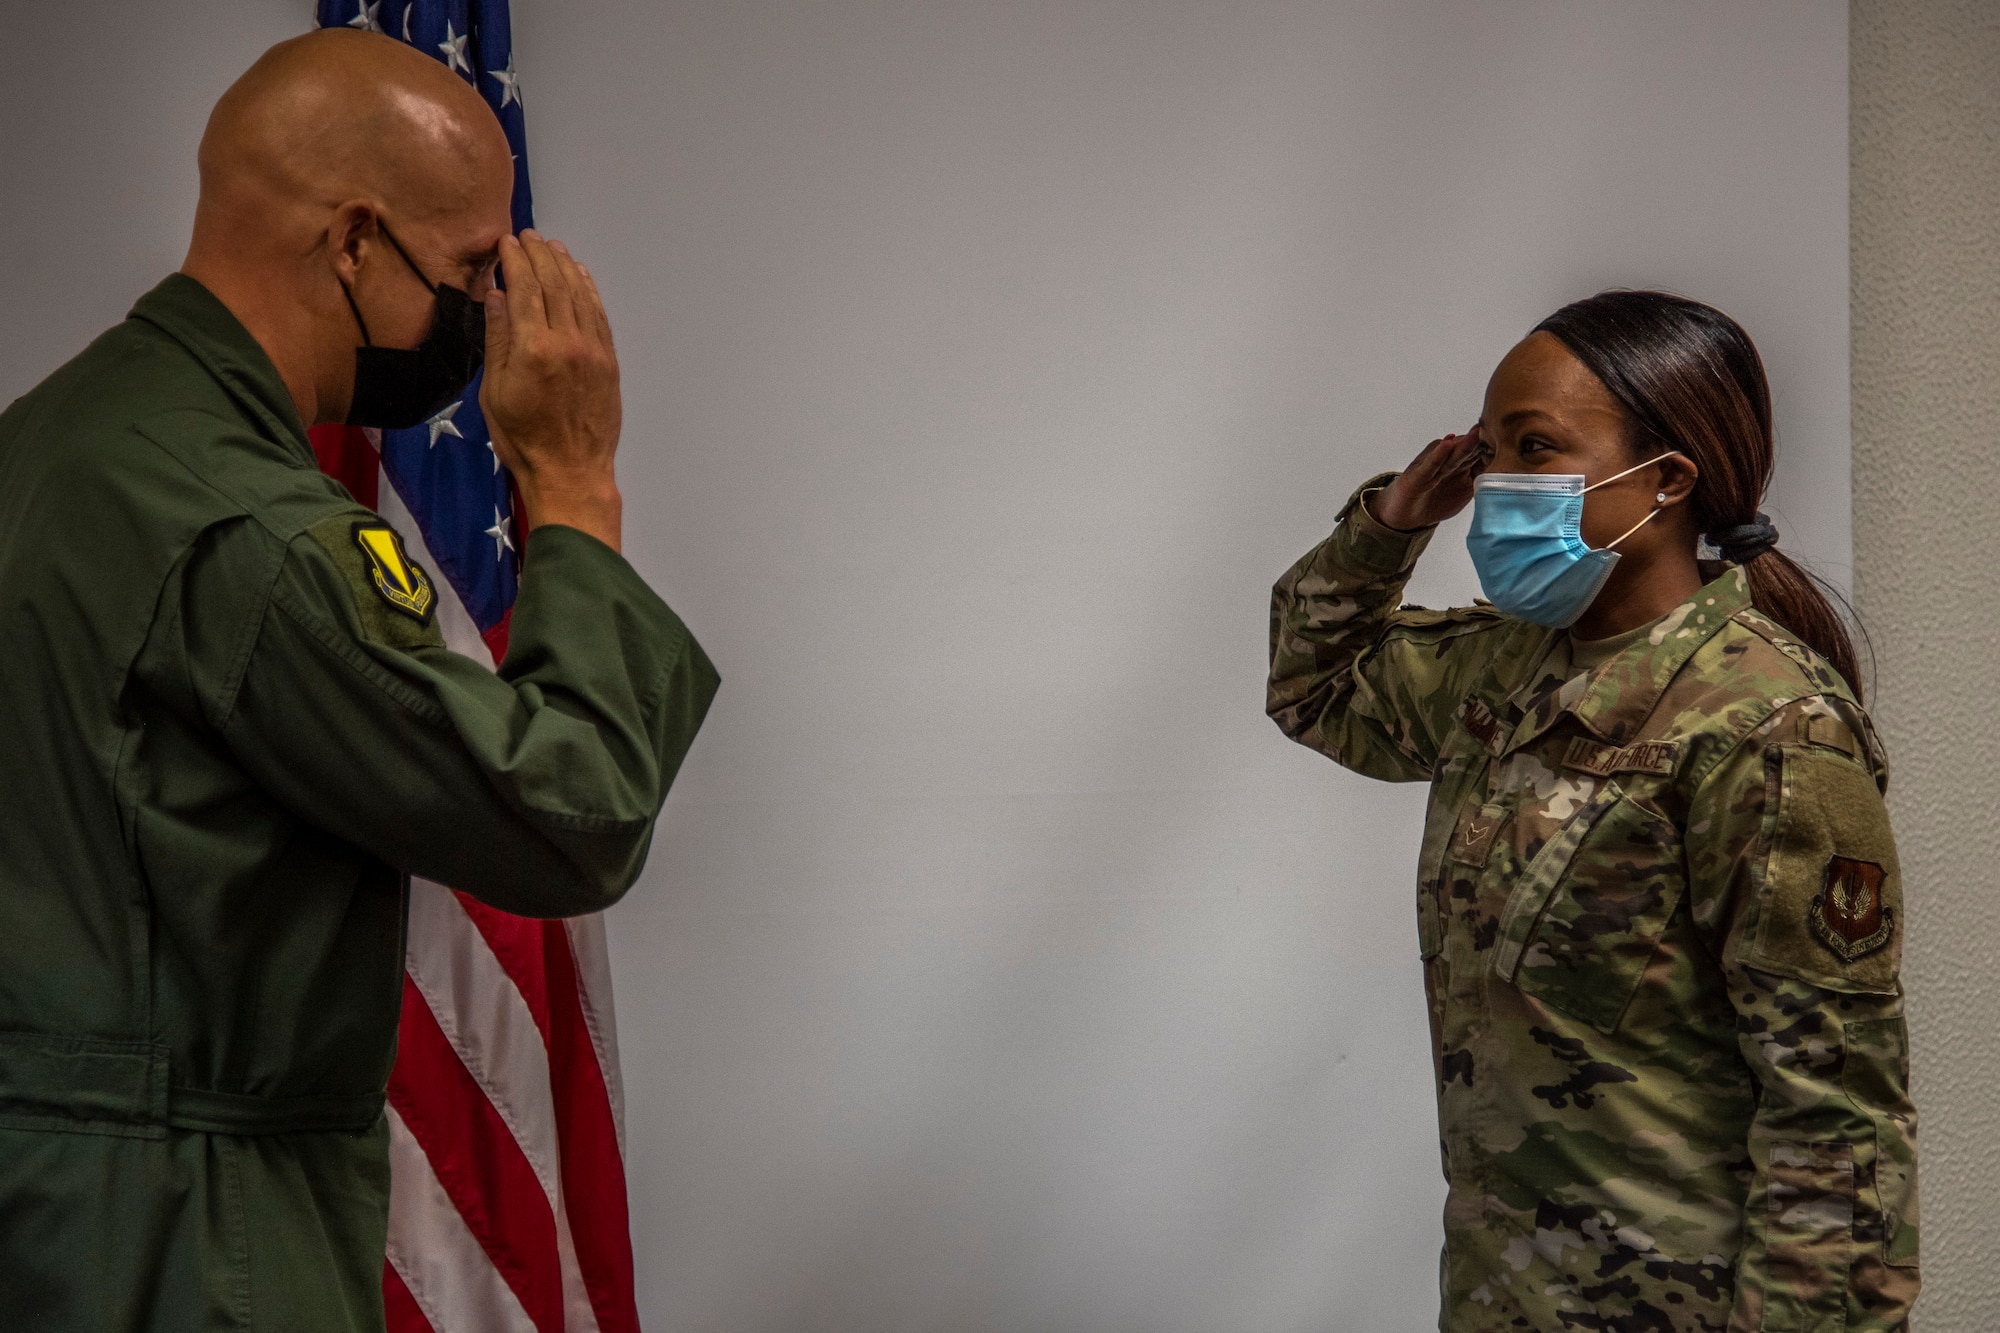 Air Force General returns salute to airman